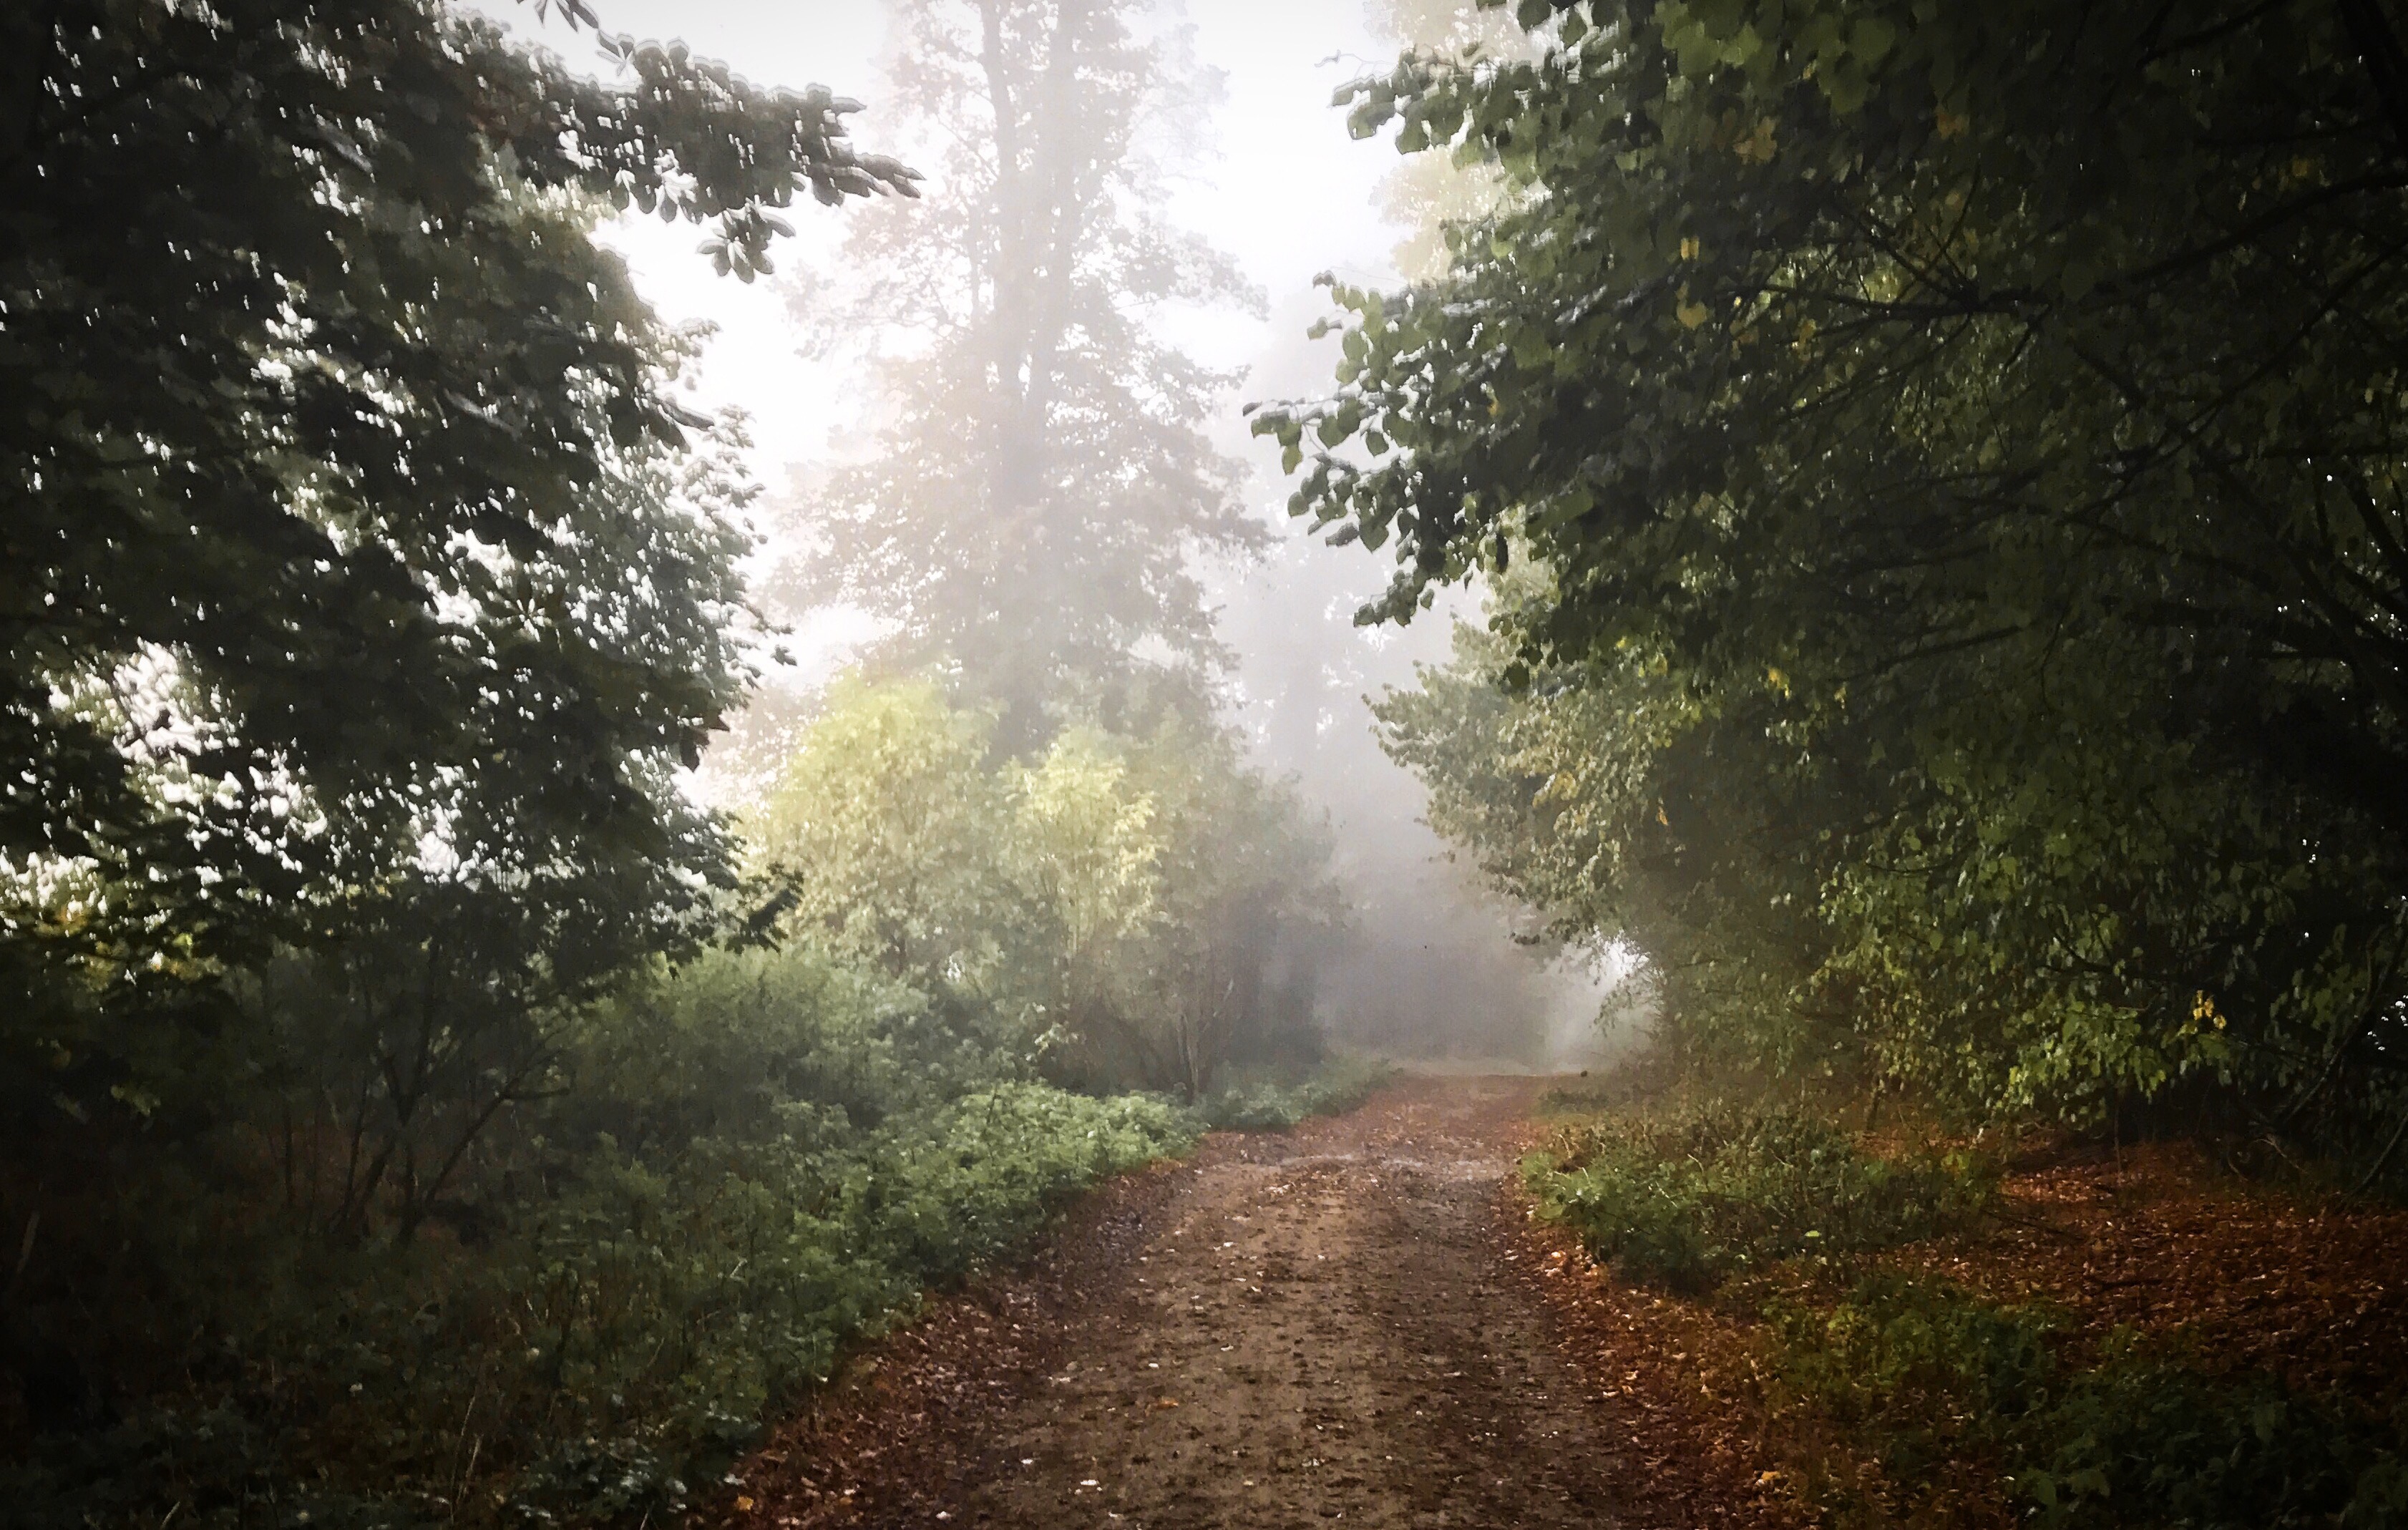 Day 354.2 – Misty morning